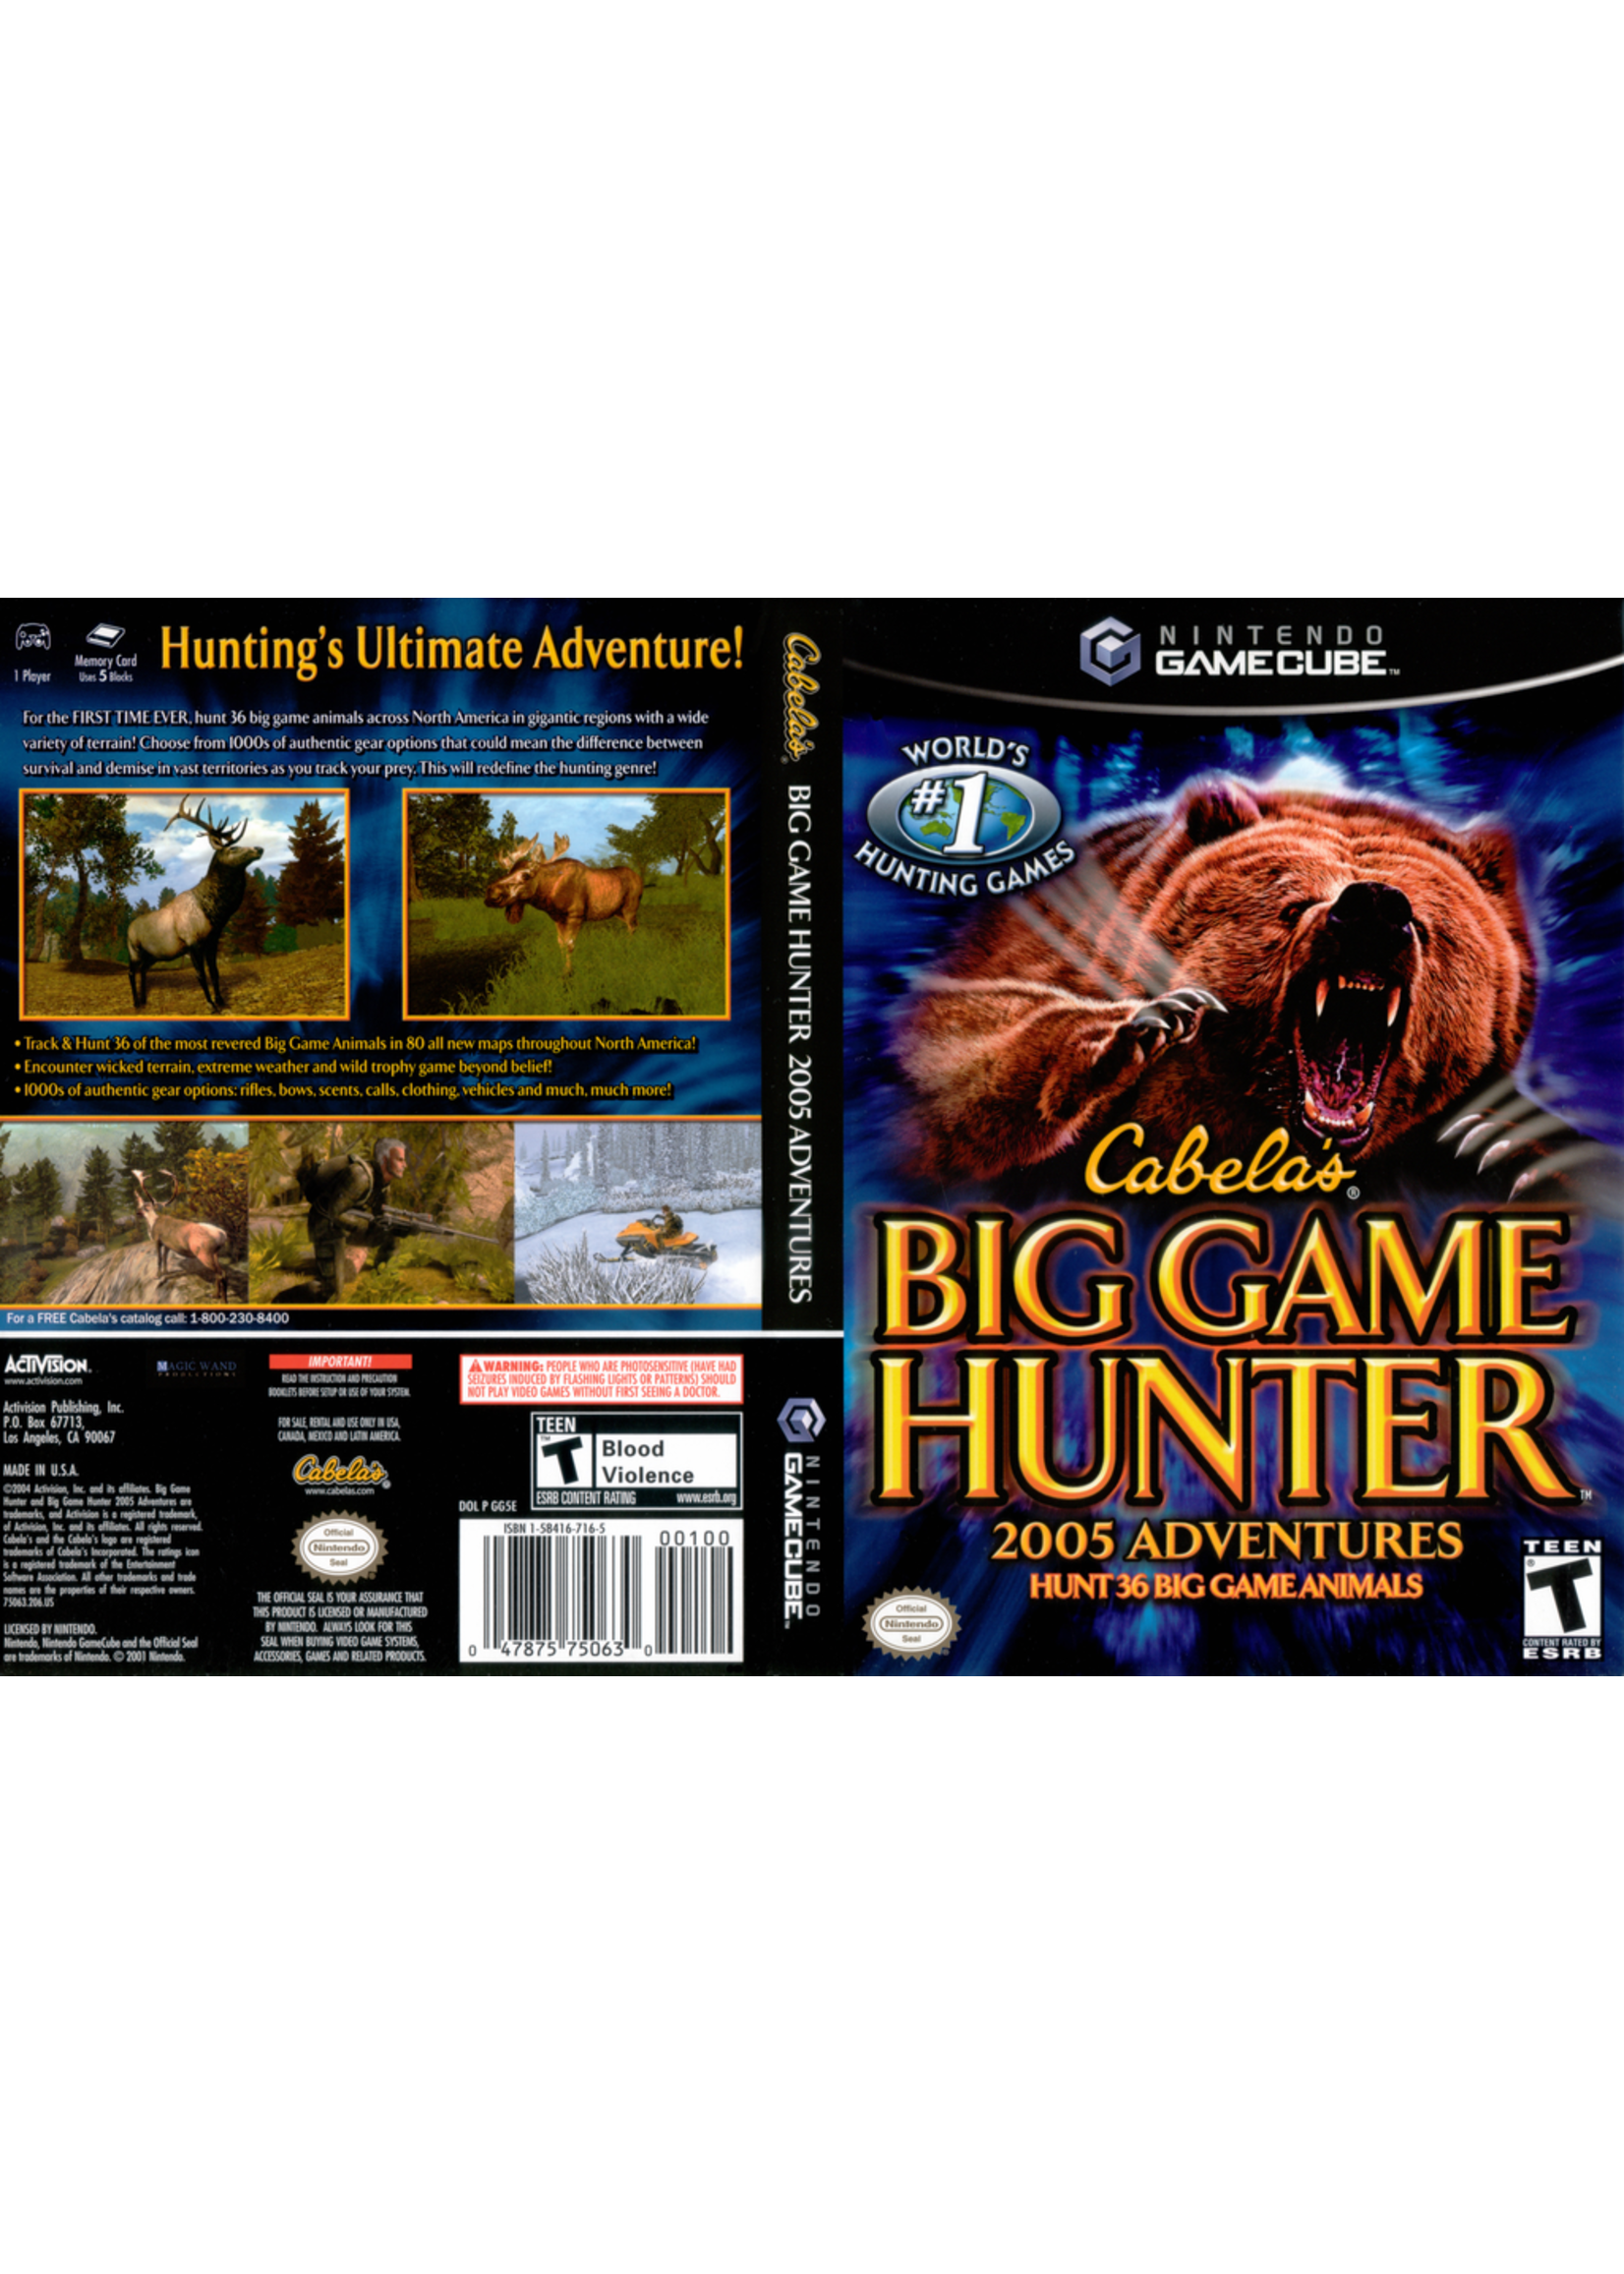 Nintendo Gamecube Cabela's Big Game Hunter 2005 Adventures